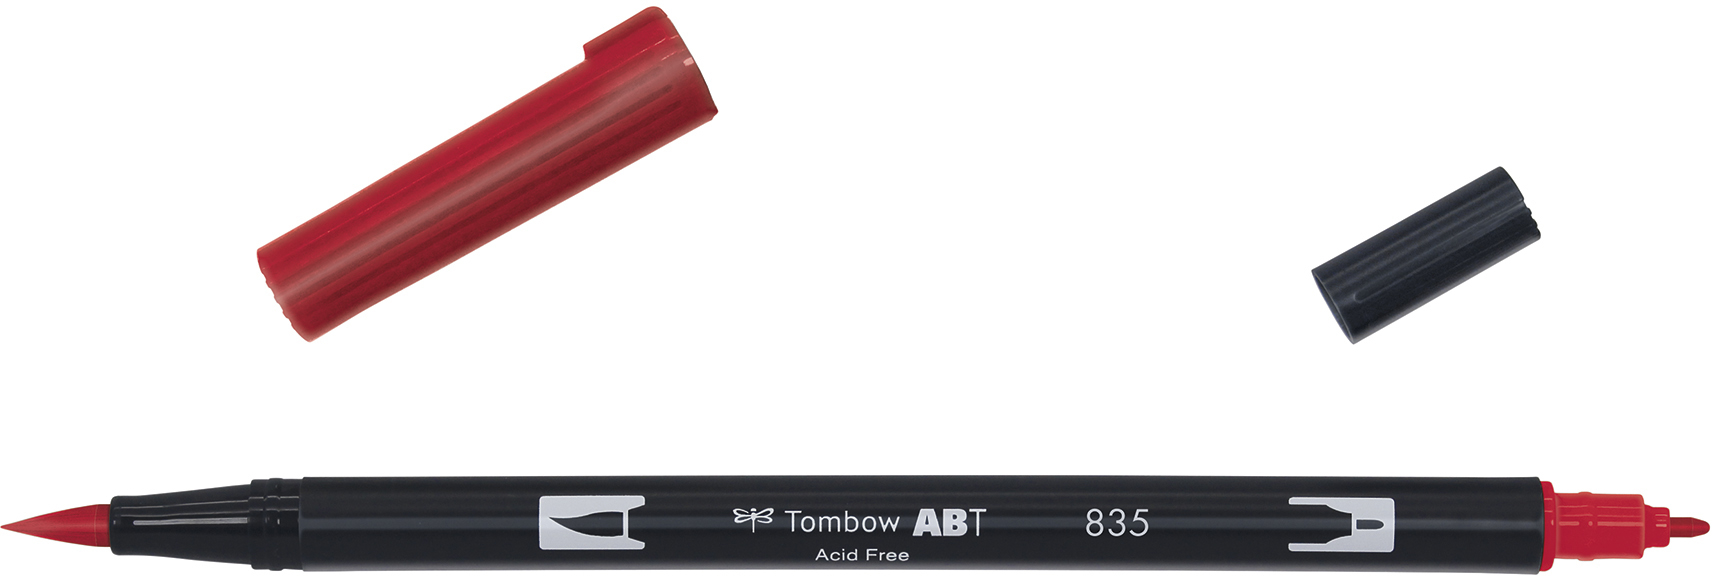 TOMBOW Dual Brush Pen ABT 835 persimmon persimmon